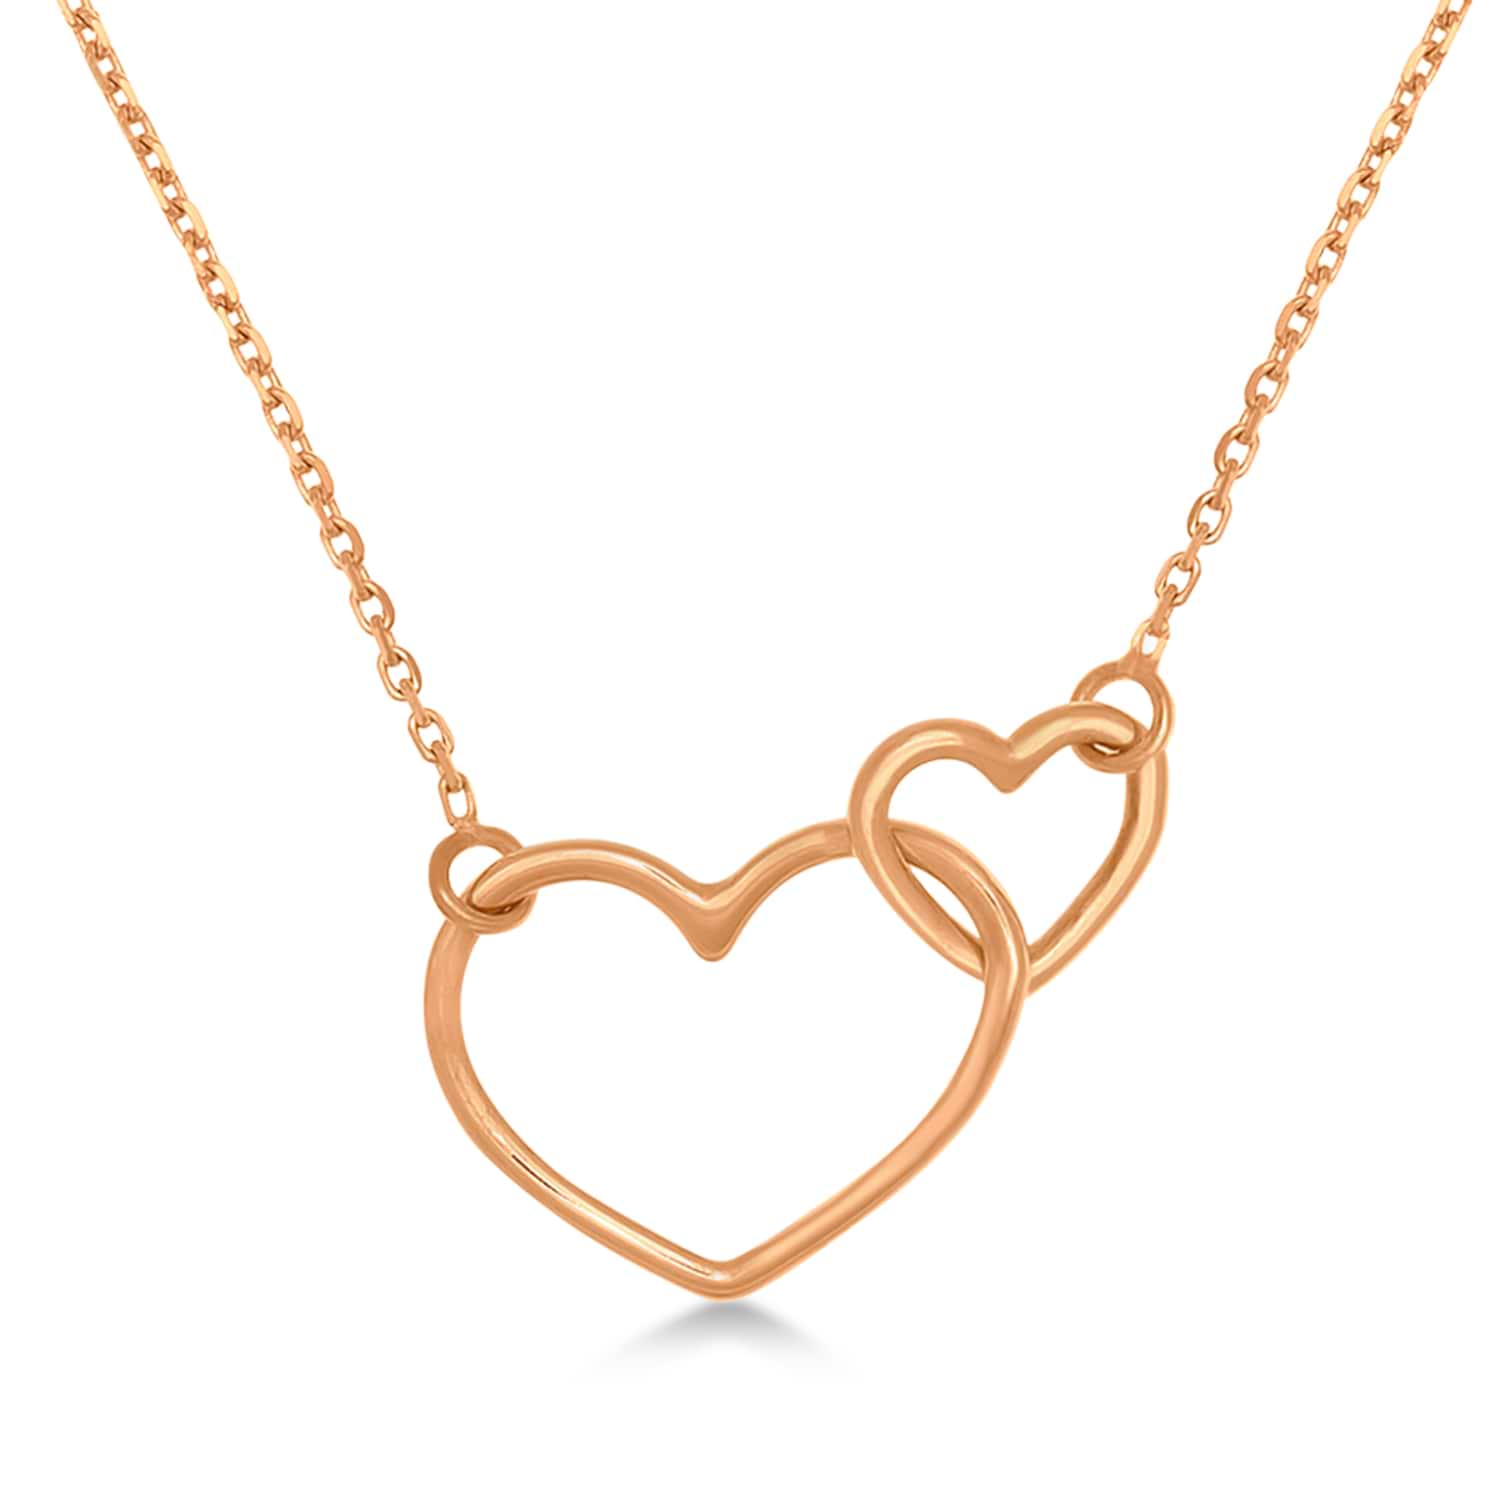 Interwoven Open Hearts Pendant Necklace 14k Rose Gold